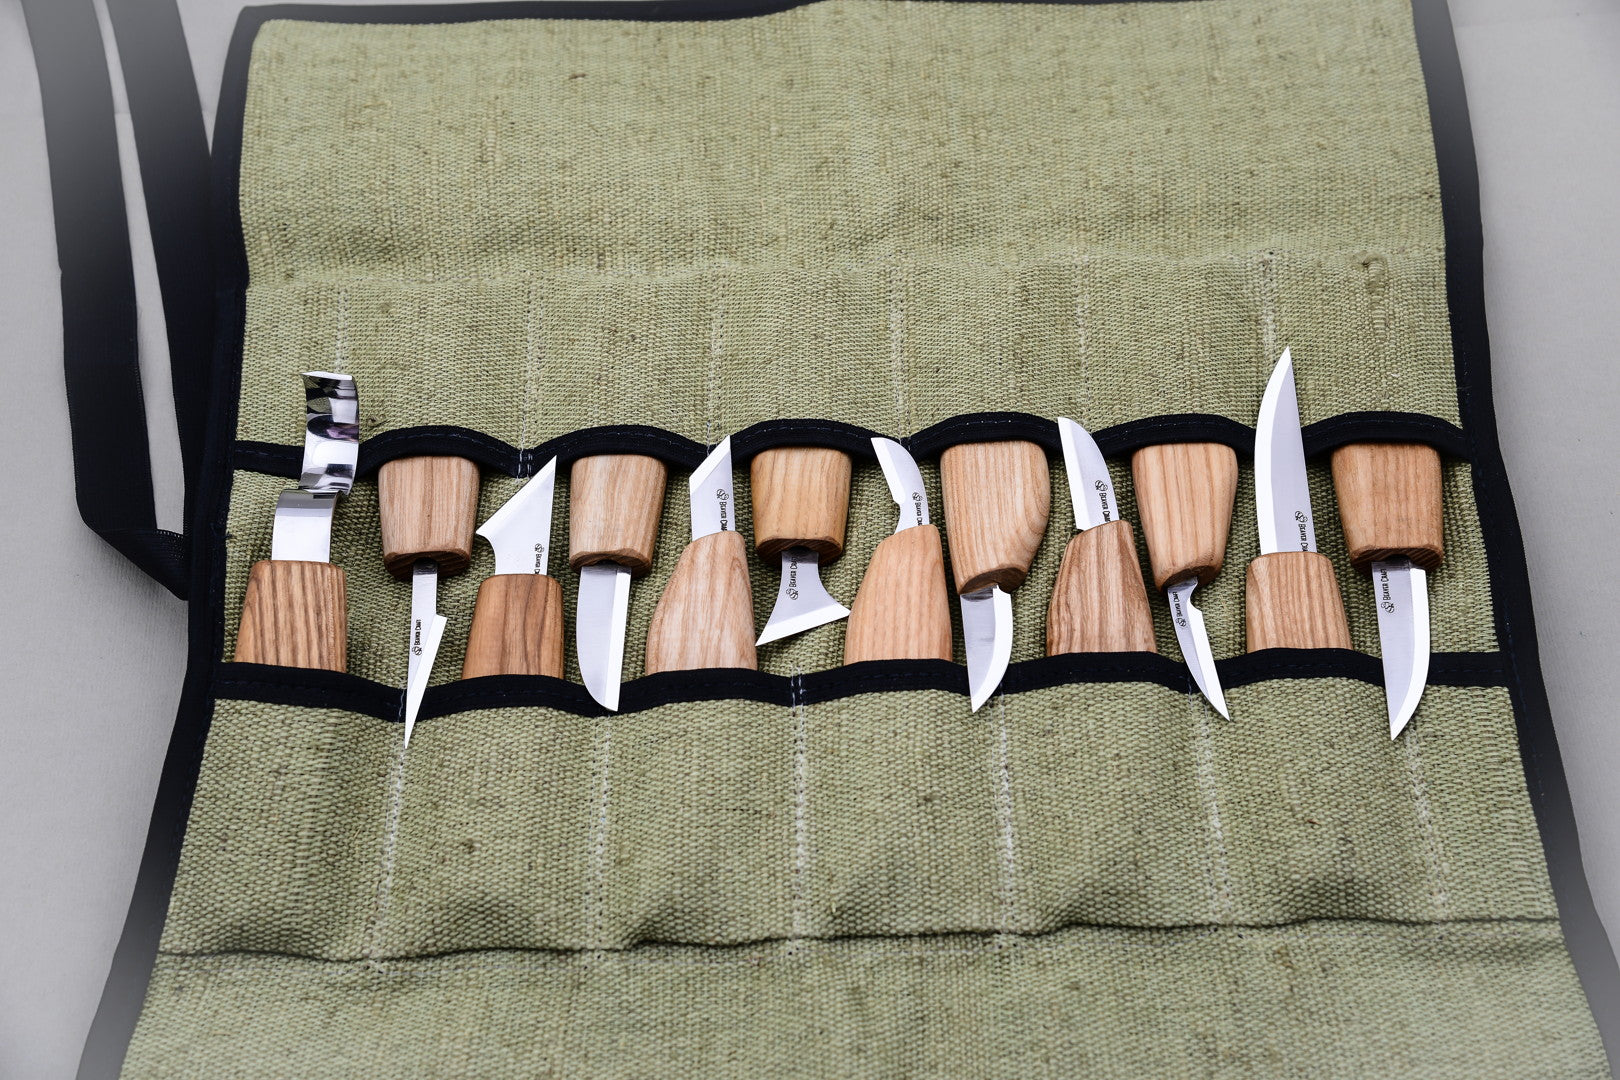 Wood carving chisels roll 7pcs set price - BeaverCraft – BeaverCraft Tools